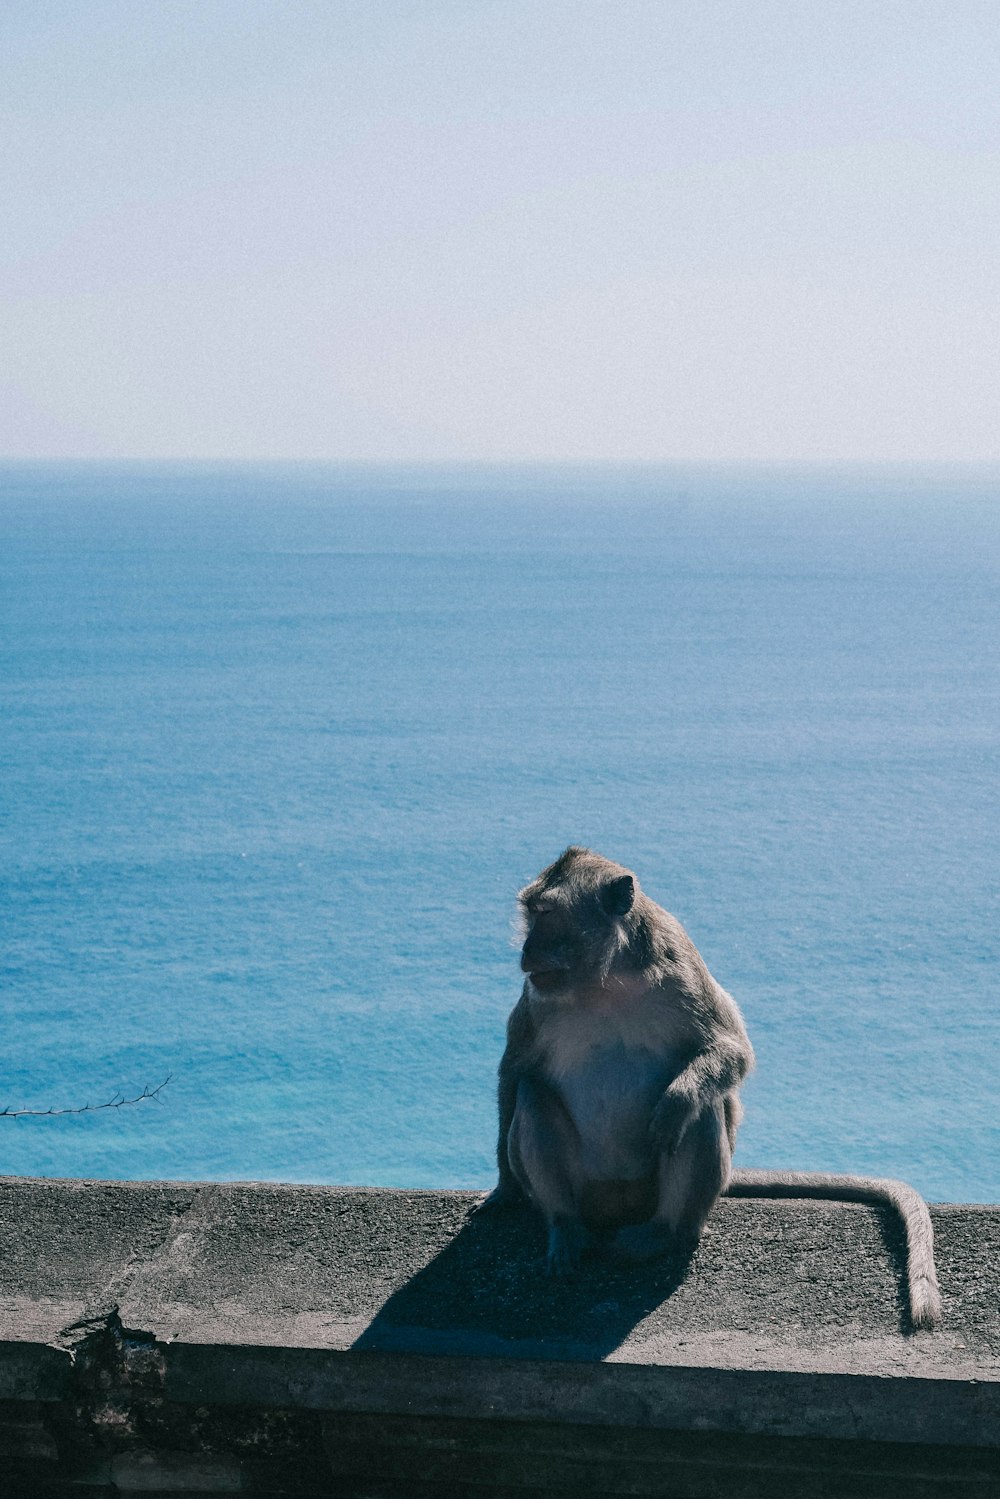 a monkey sitting on a ledge near the ocean